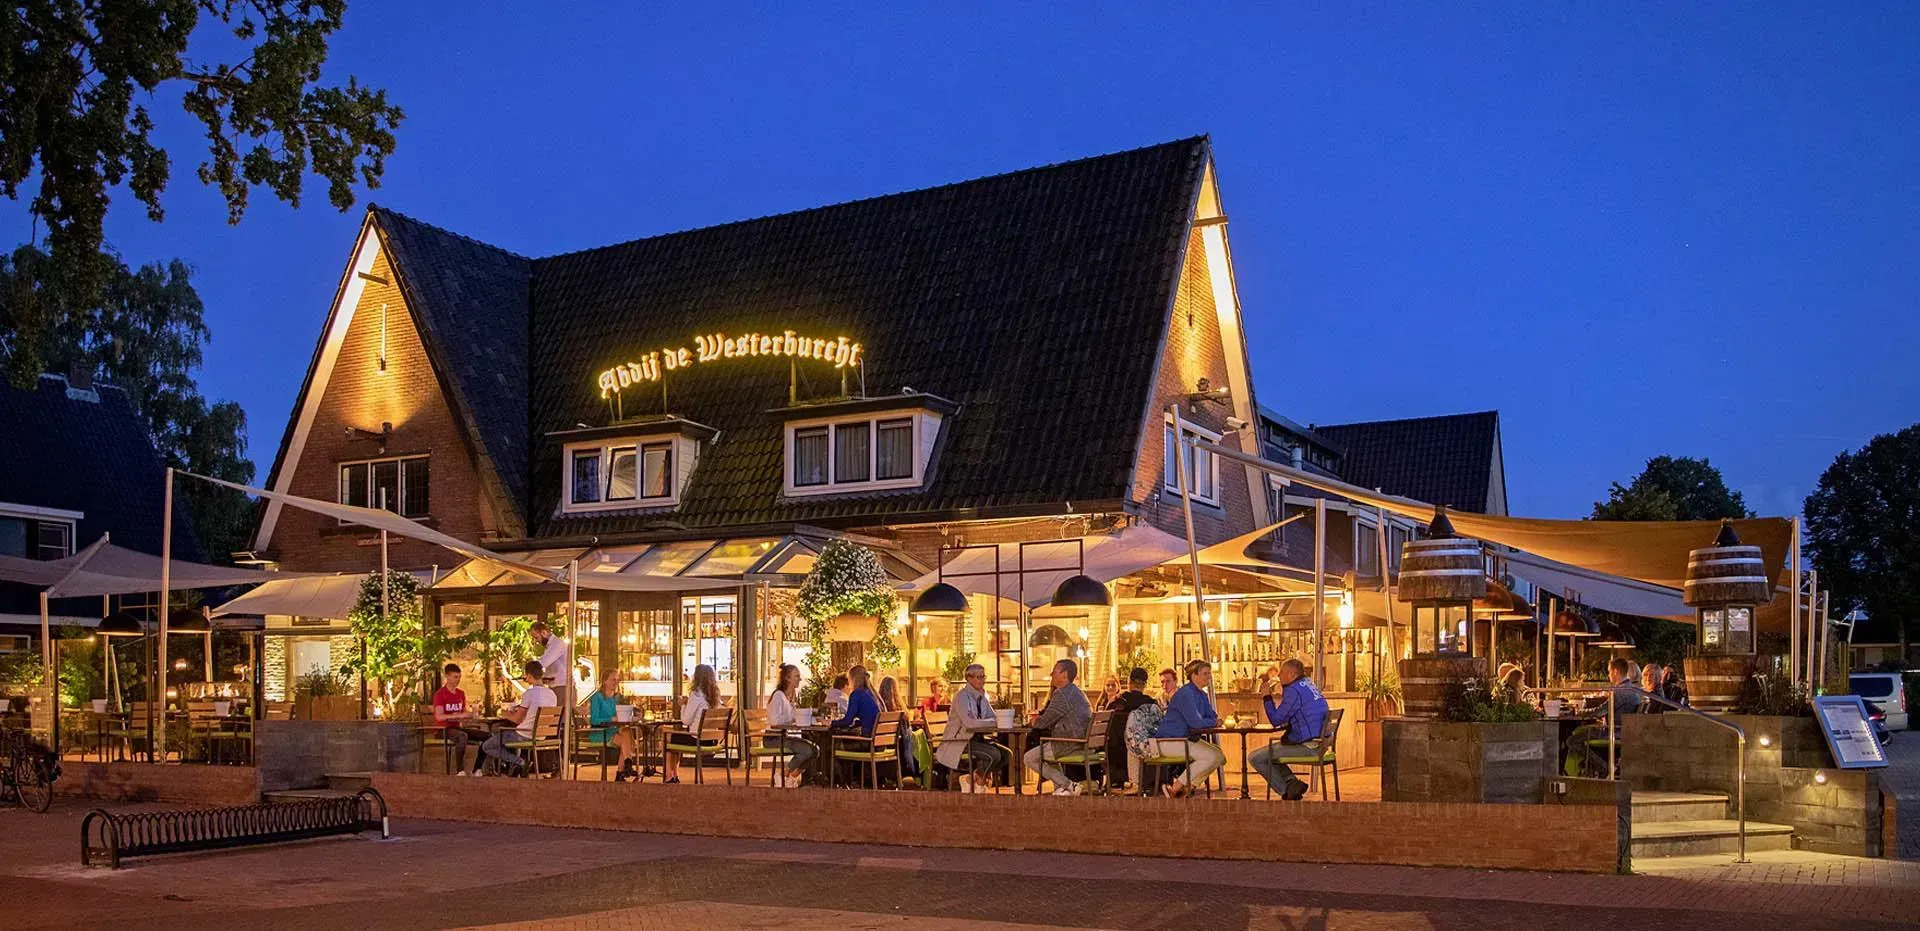 Hotel & Restaurant Westerbork in Drenthe